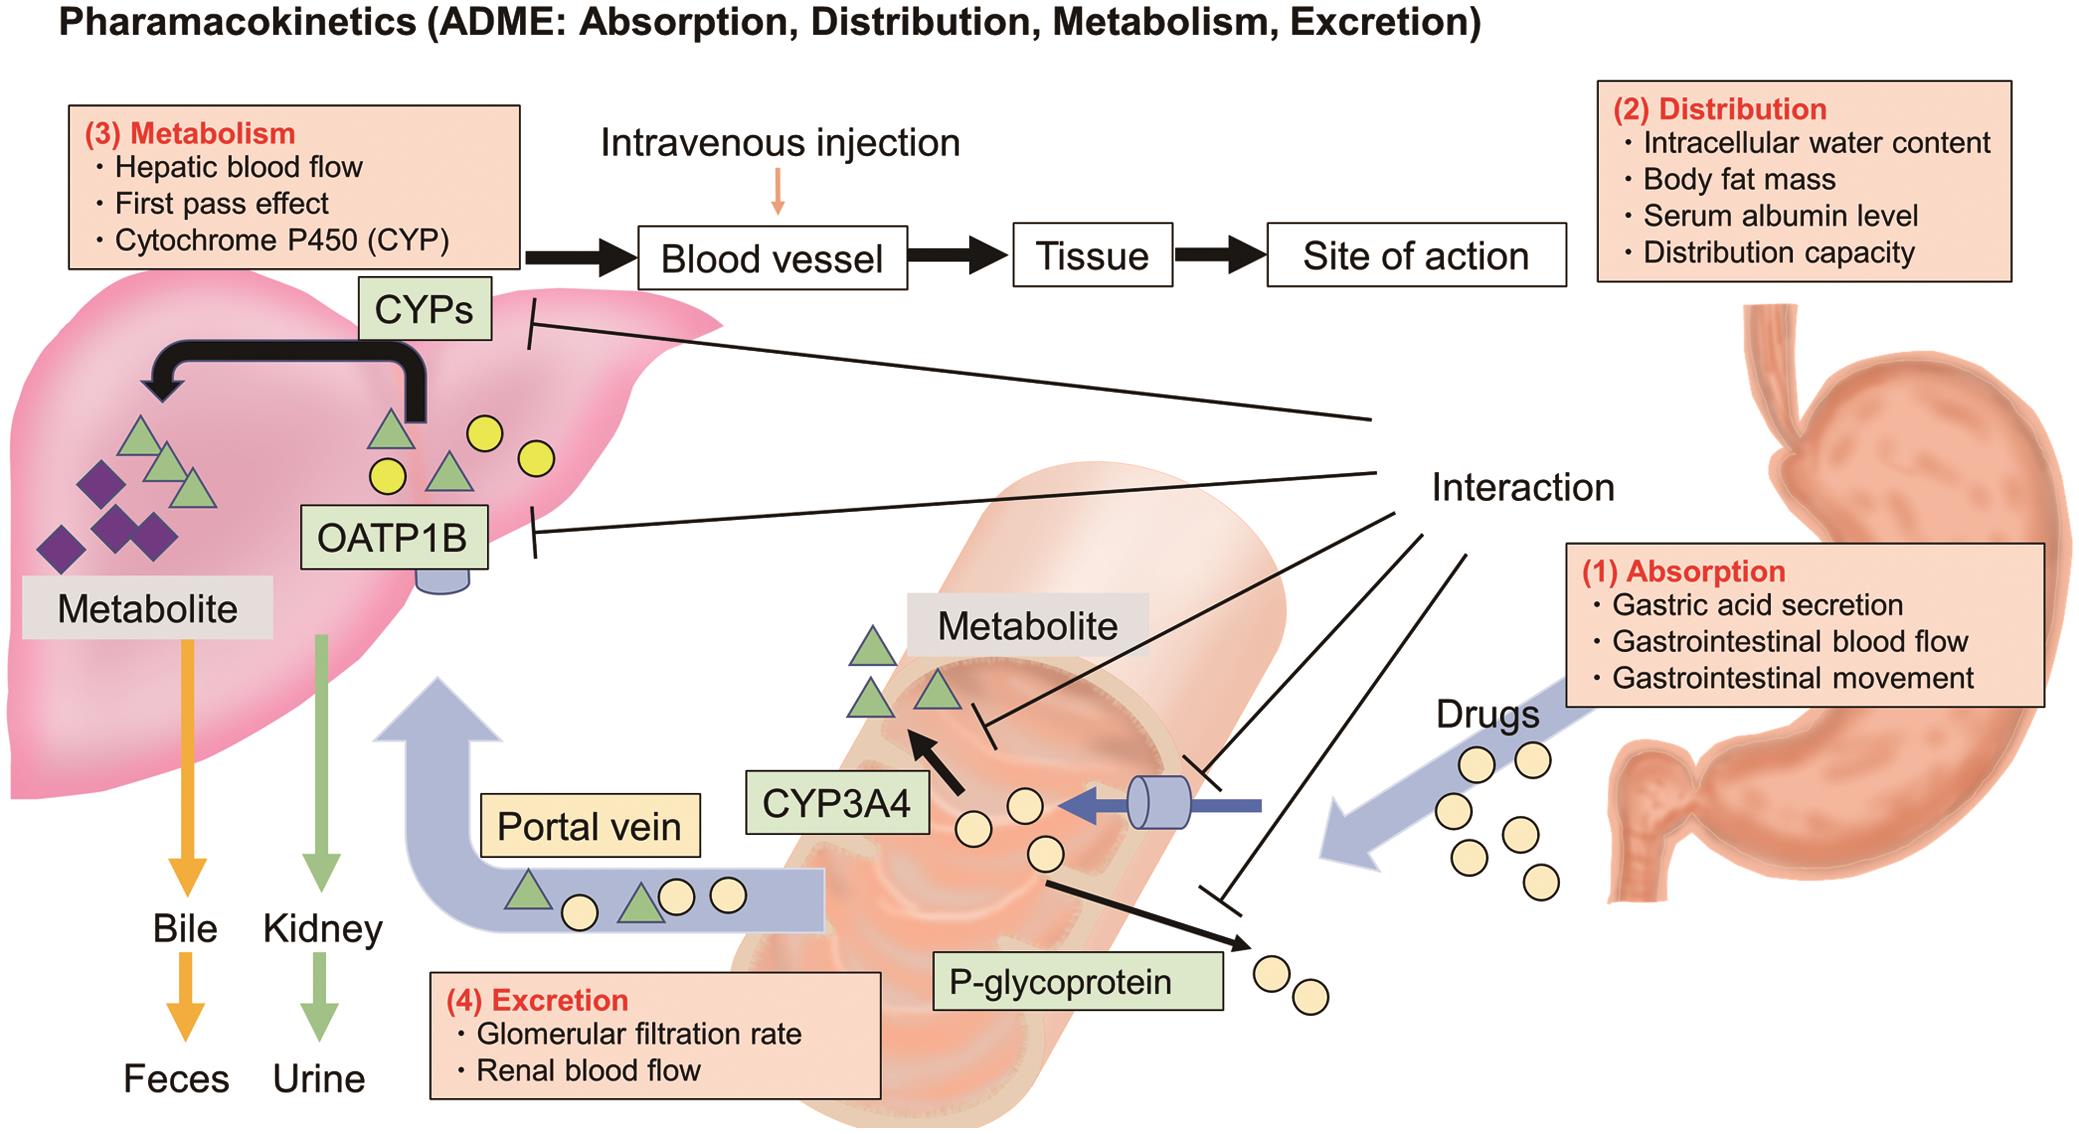 Pharmacokinetics (ADME: Absorption, Distribution, Metabolism, Excretion).